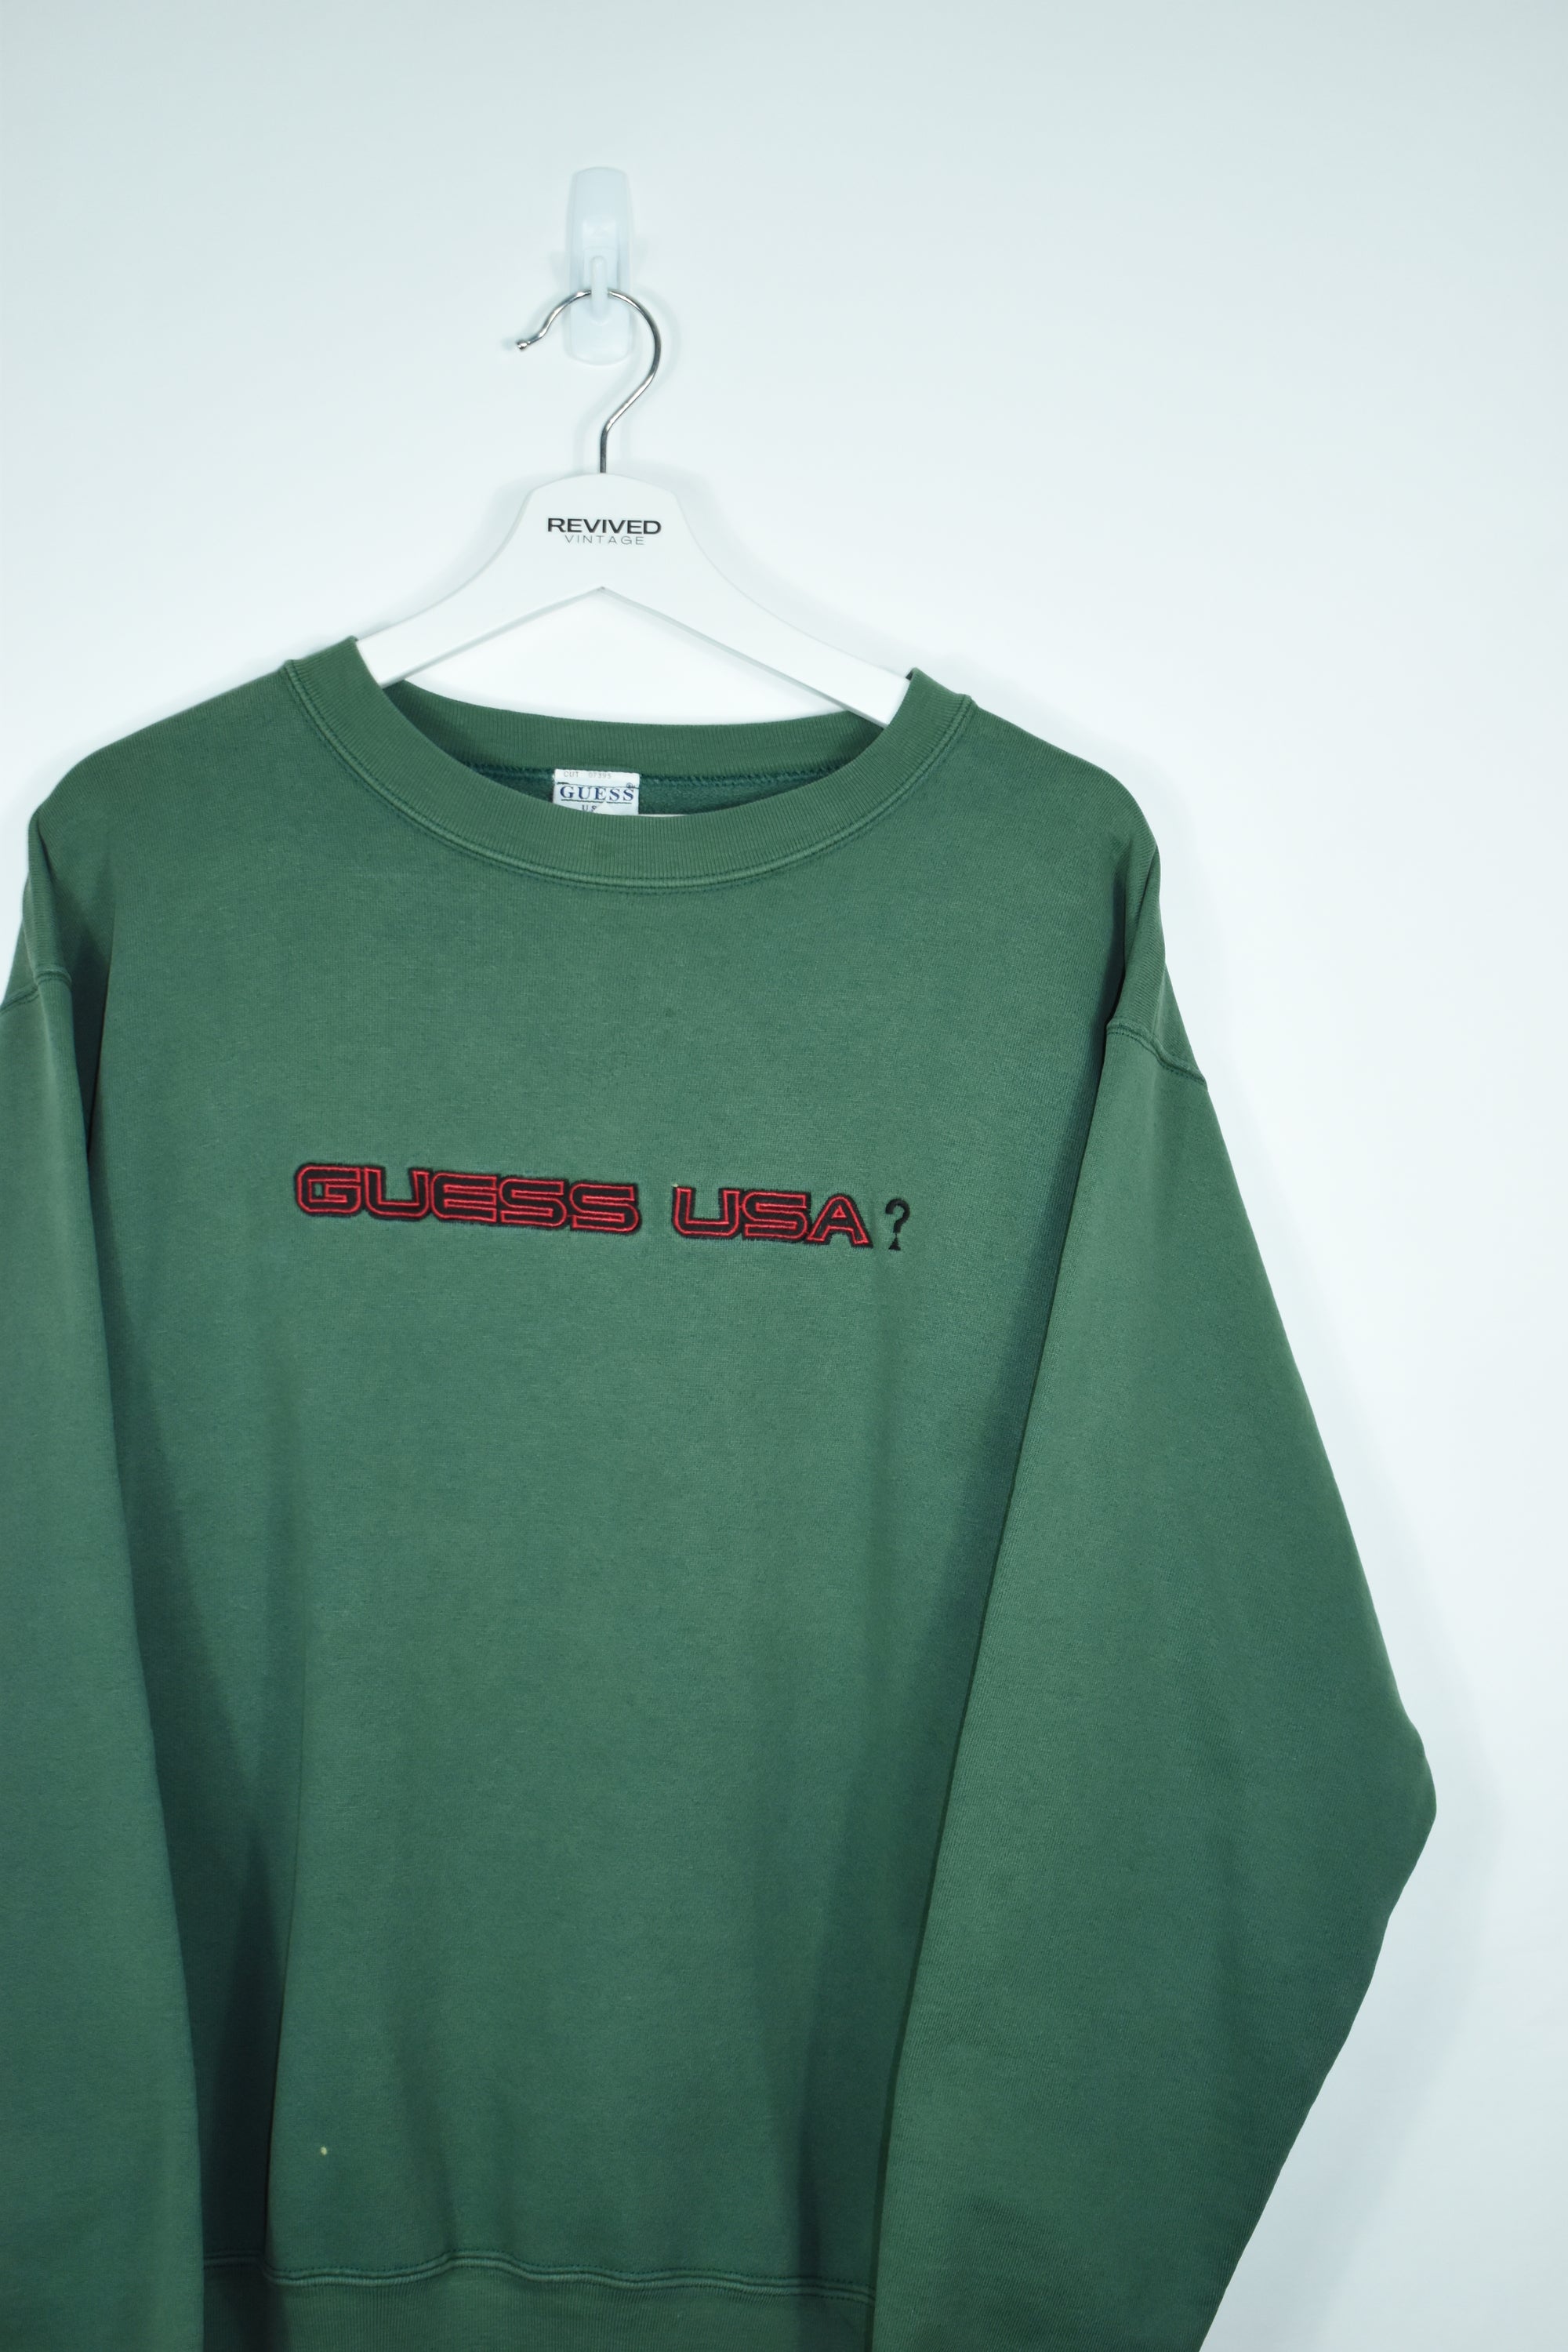 Vintage Guess USA Embroidery Sweatshirt Medium / Large